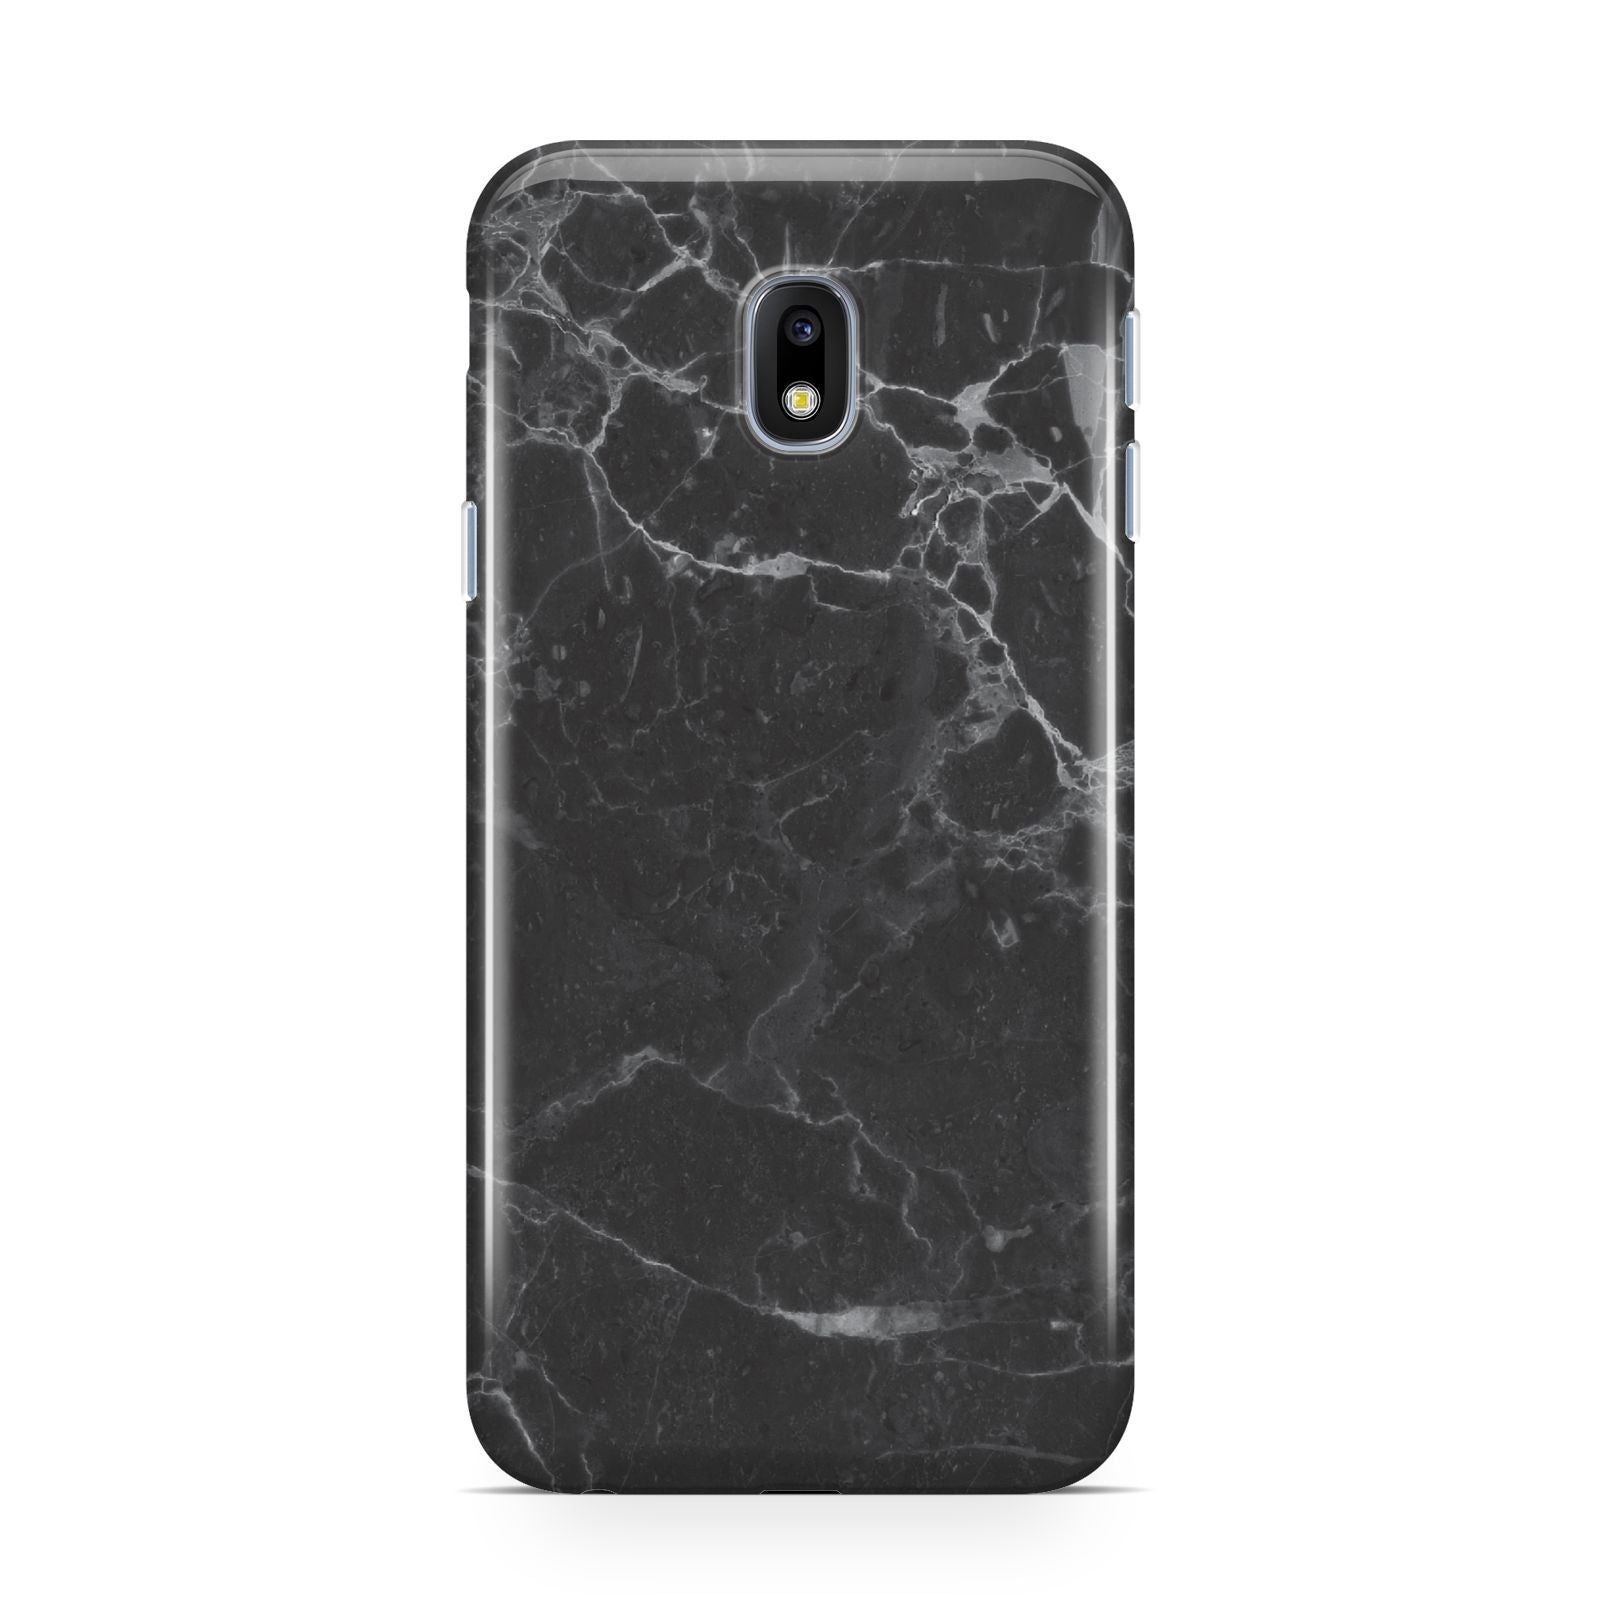 Faux Marble Effect Black Samsung Galaxy J3 2017 Case